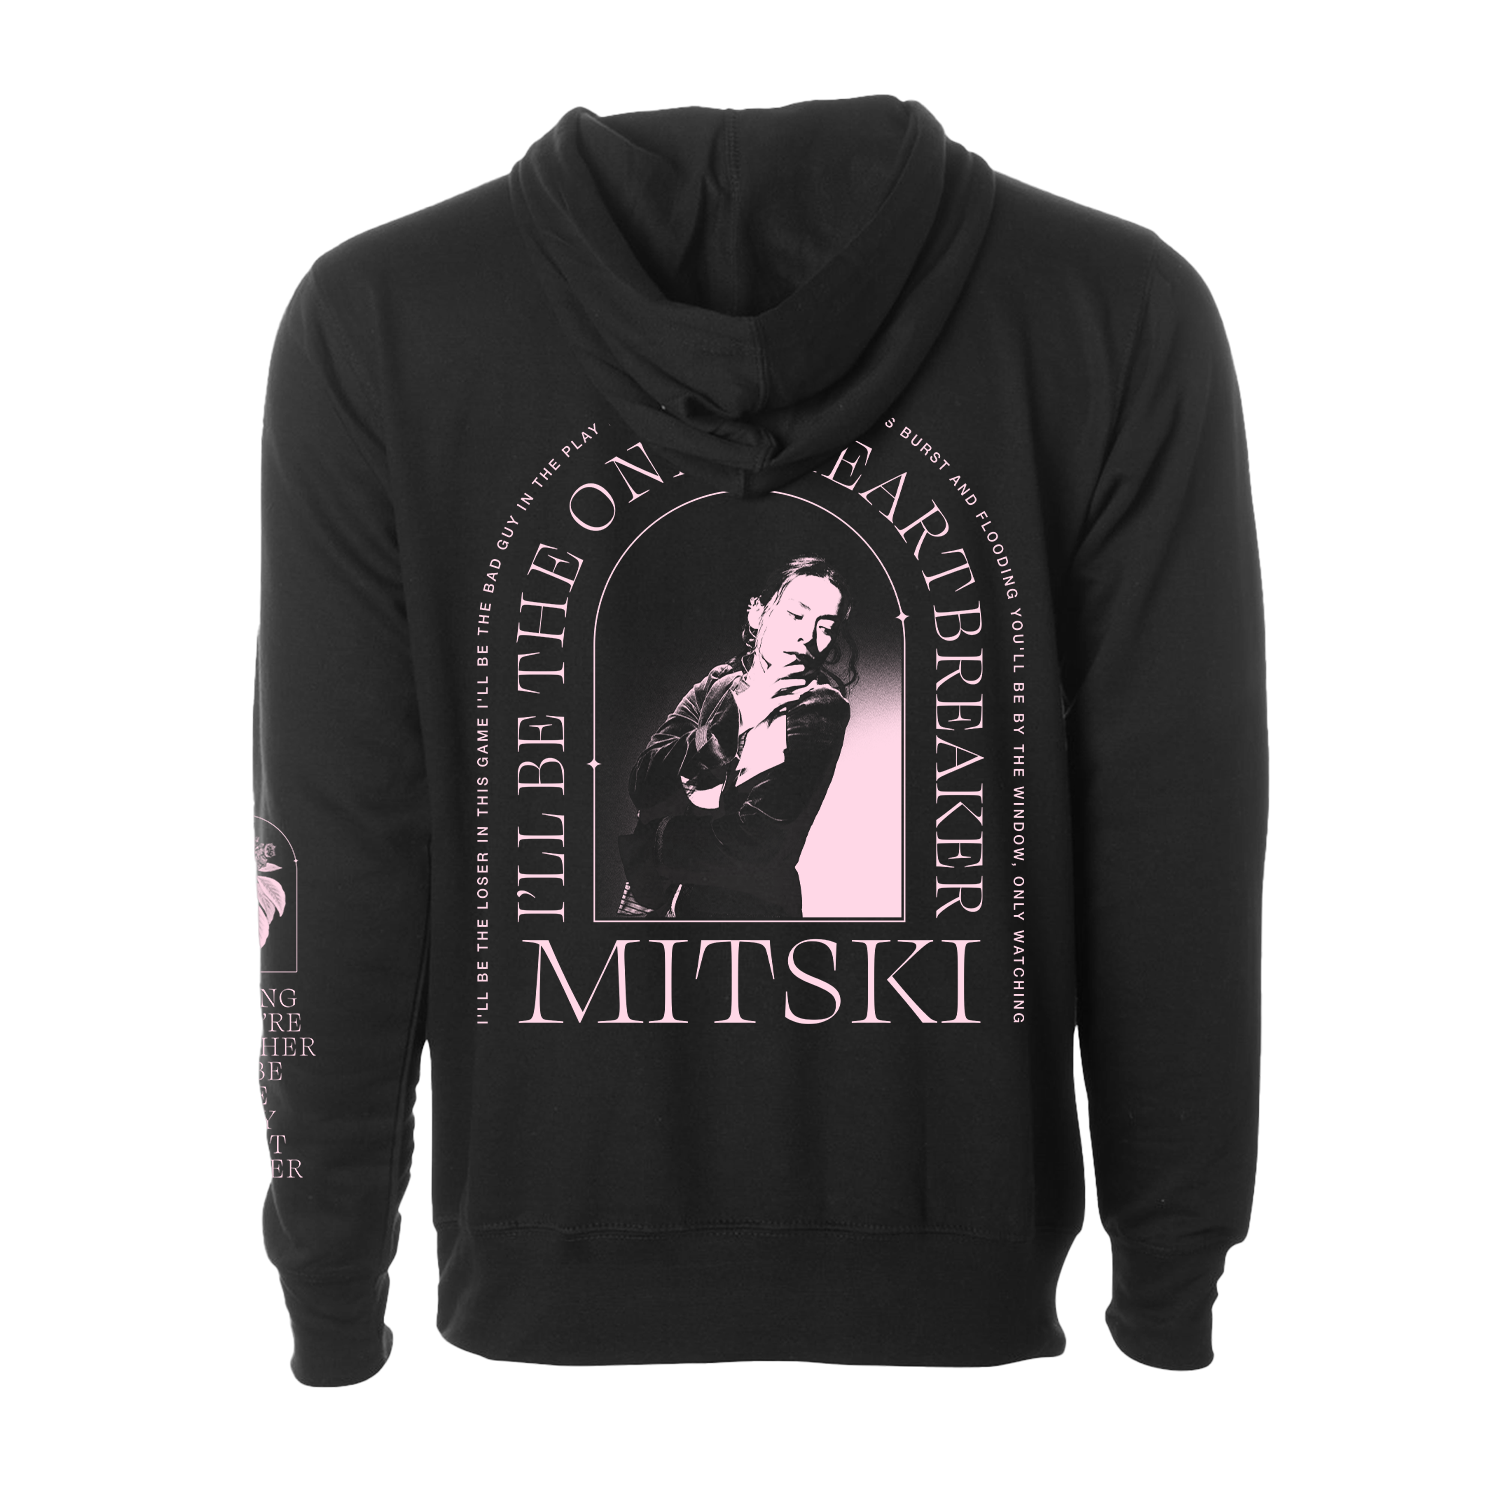 Mitski 'Only Heartbreaker' black hoodie.